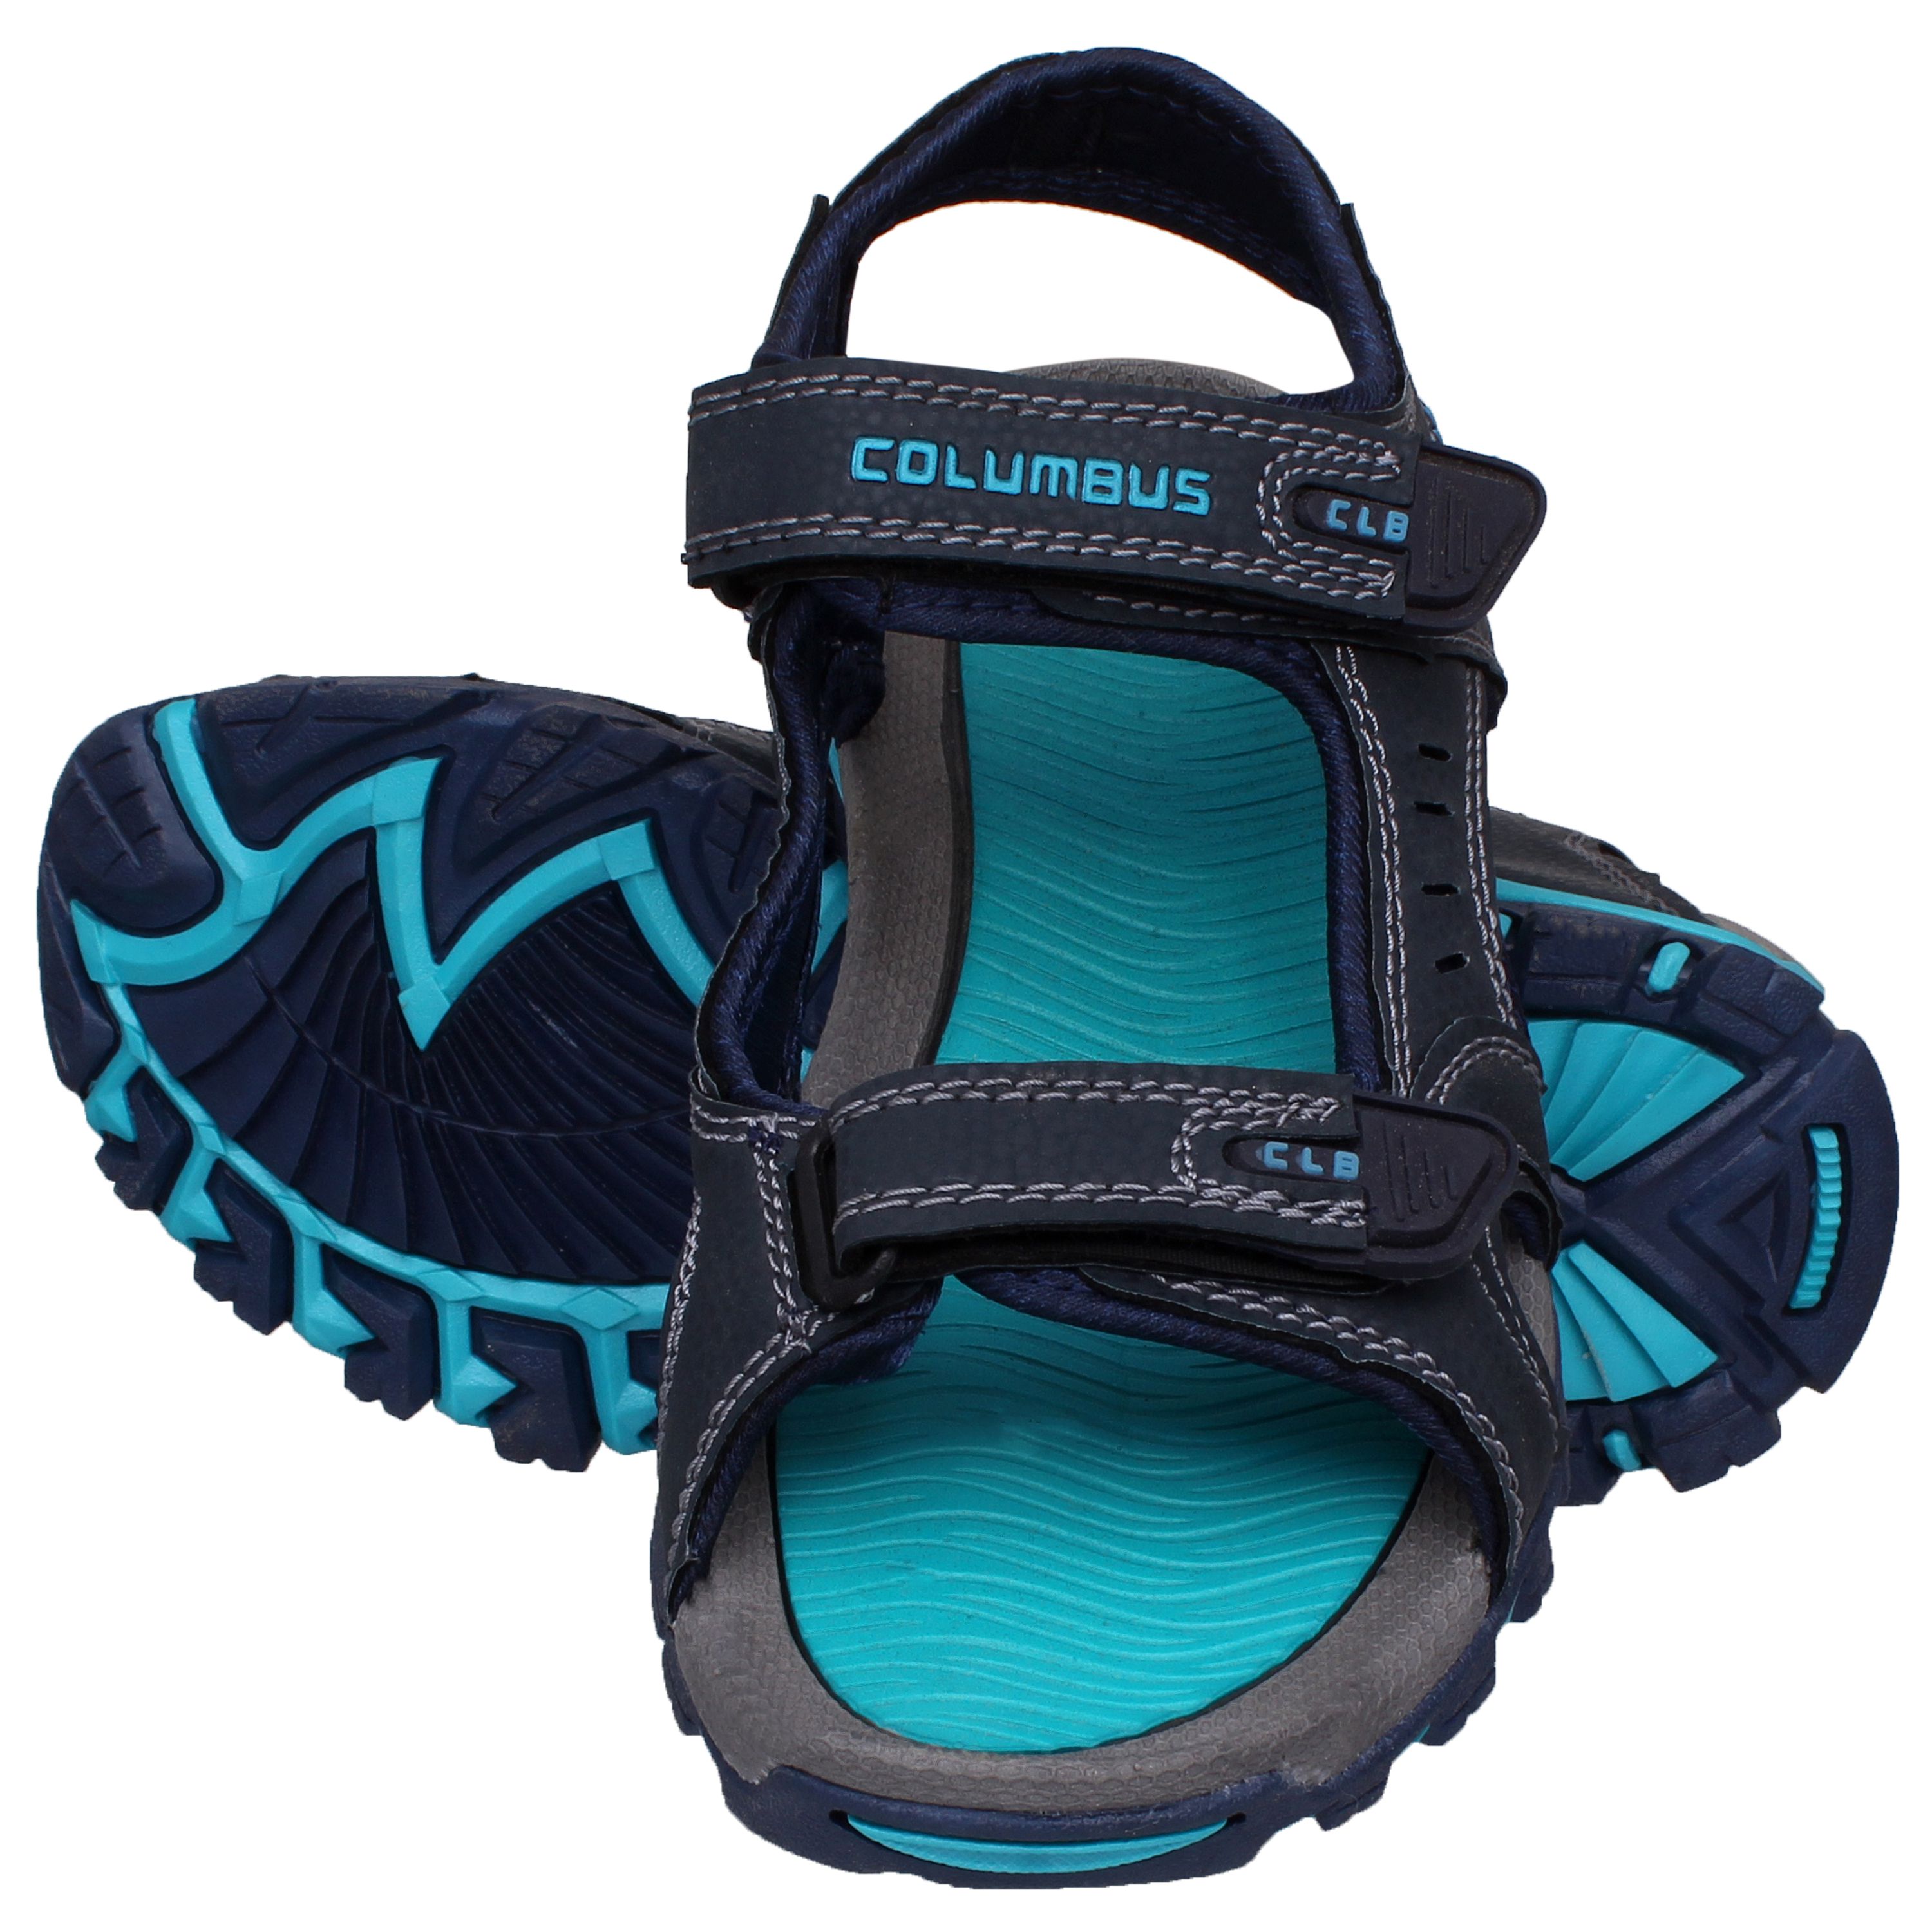 Columbus Navy Sandals - Buy Columbus Navy Sandals Online at Best Prices ...